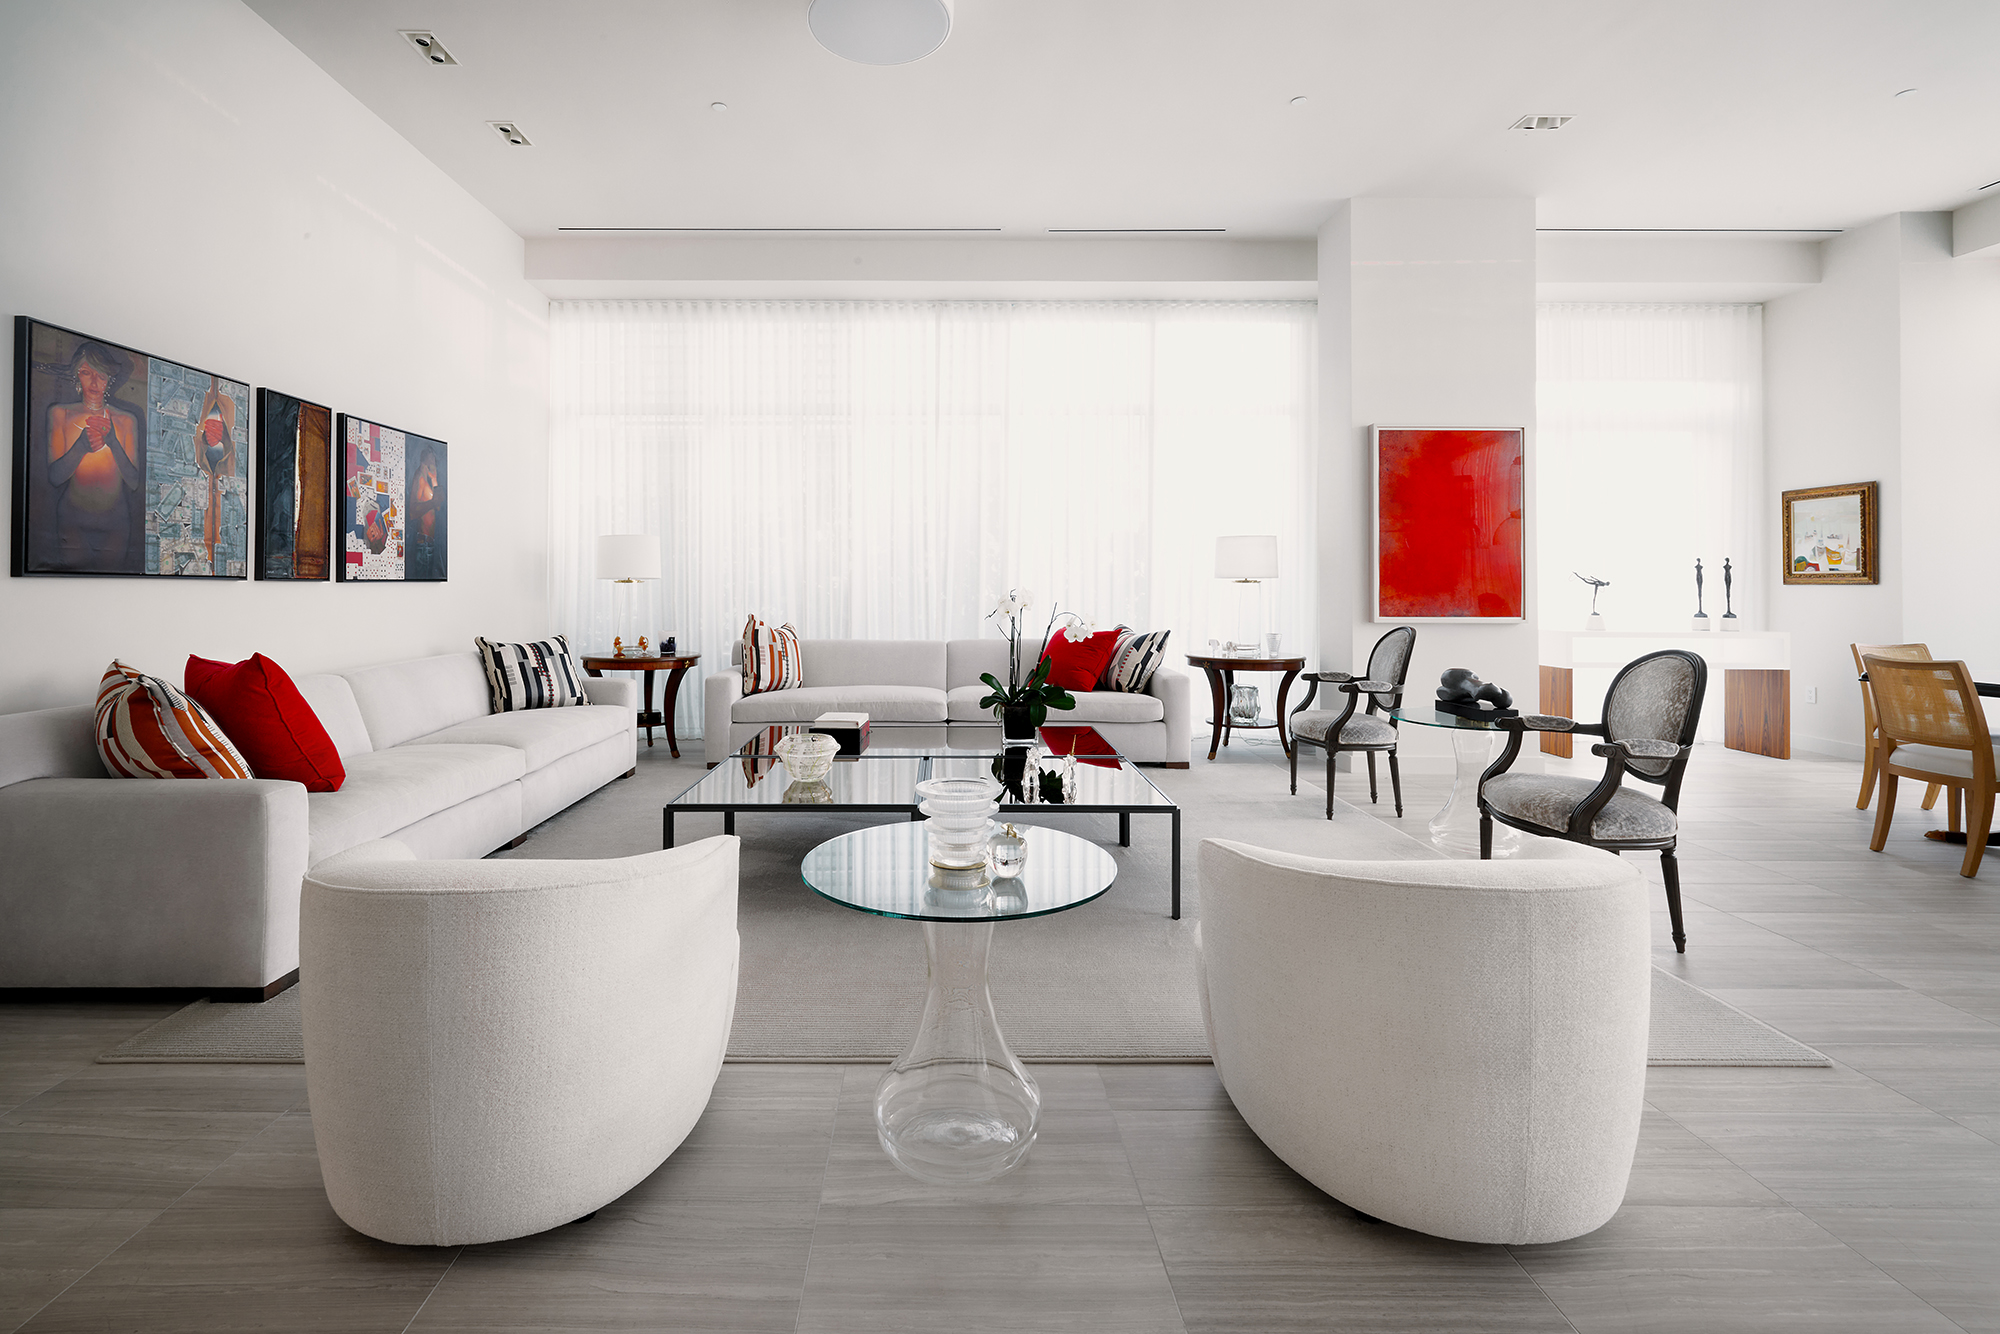 Ritz Carlton Living room by Kevin gray